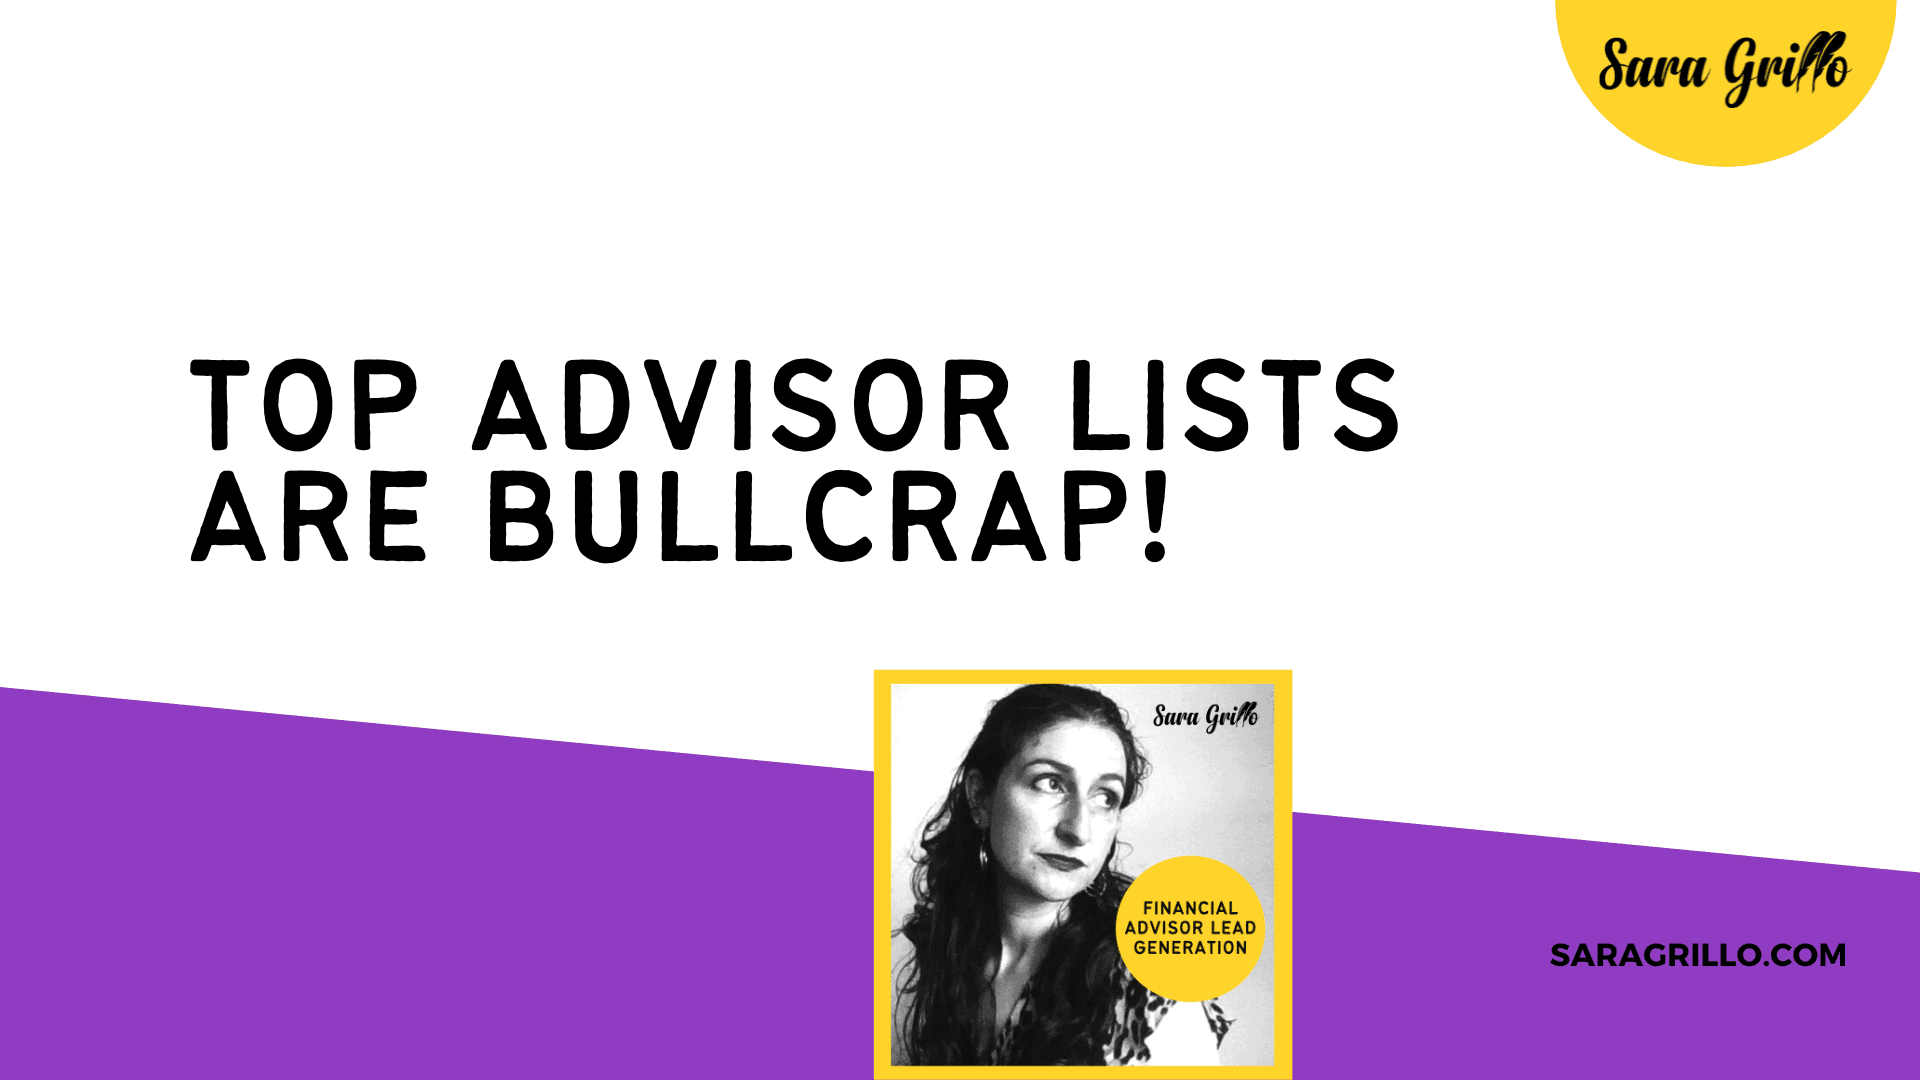 Top financial advisor lists and rankings are bullcrap! Abolish them!